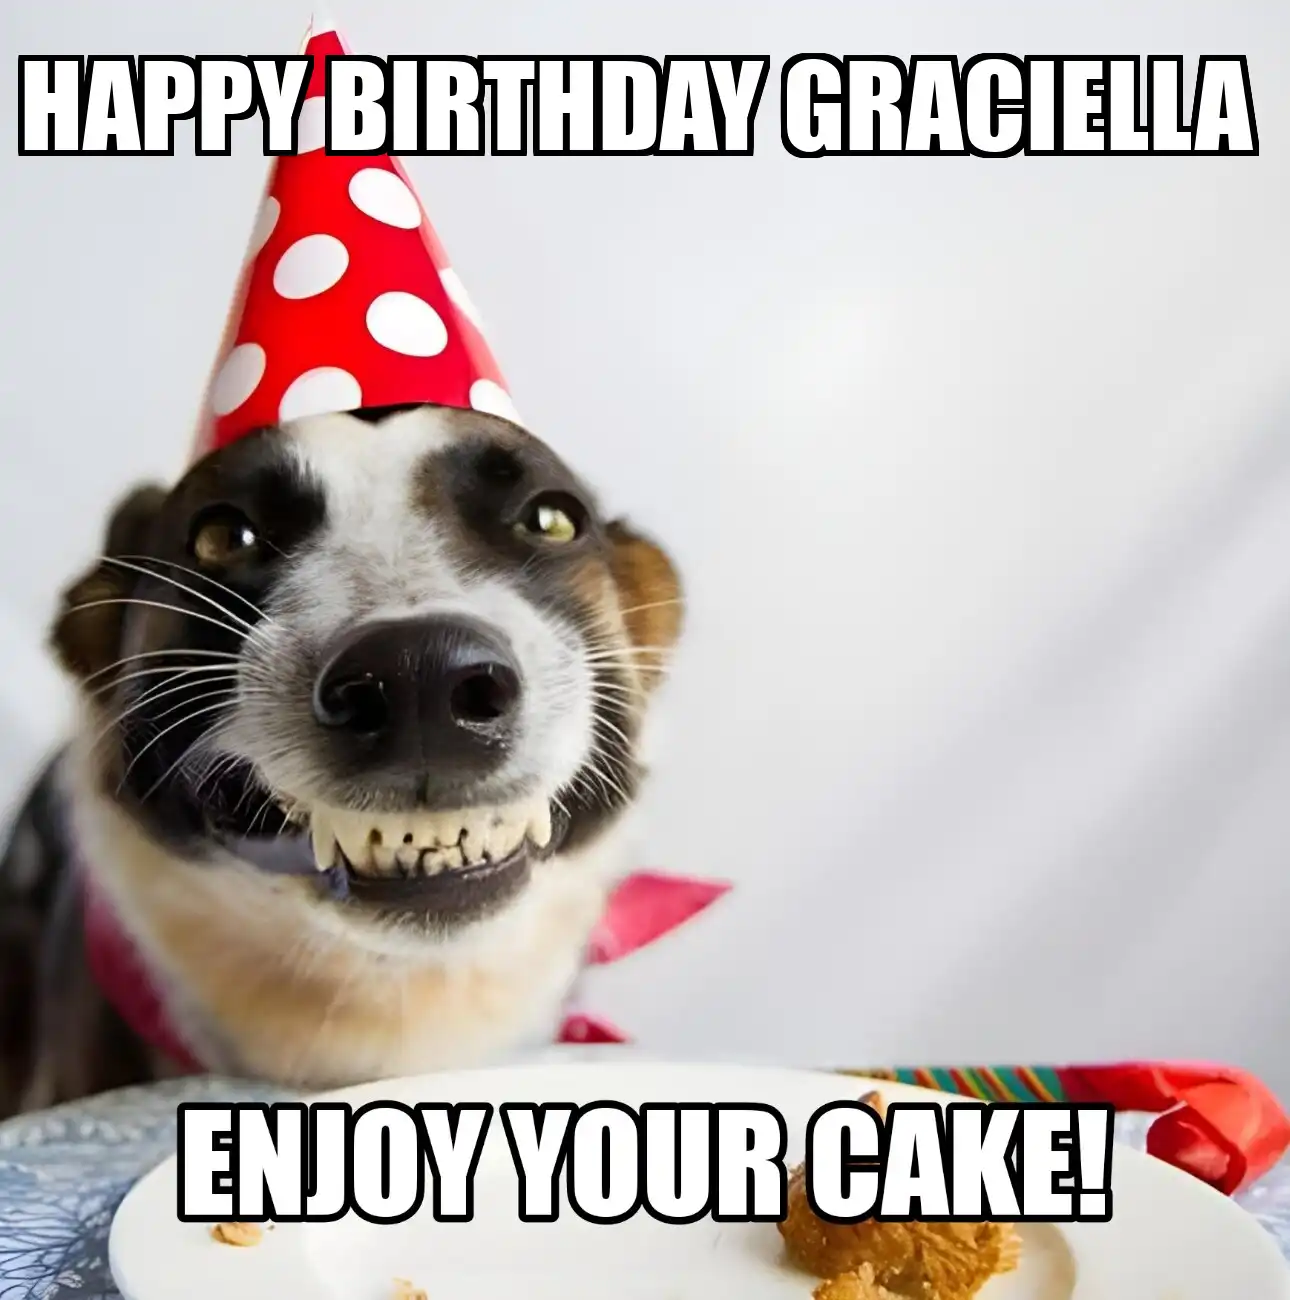 Happy Birthday Graciella Enjoy Your Cake Dog Meme